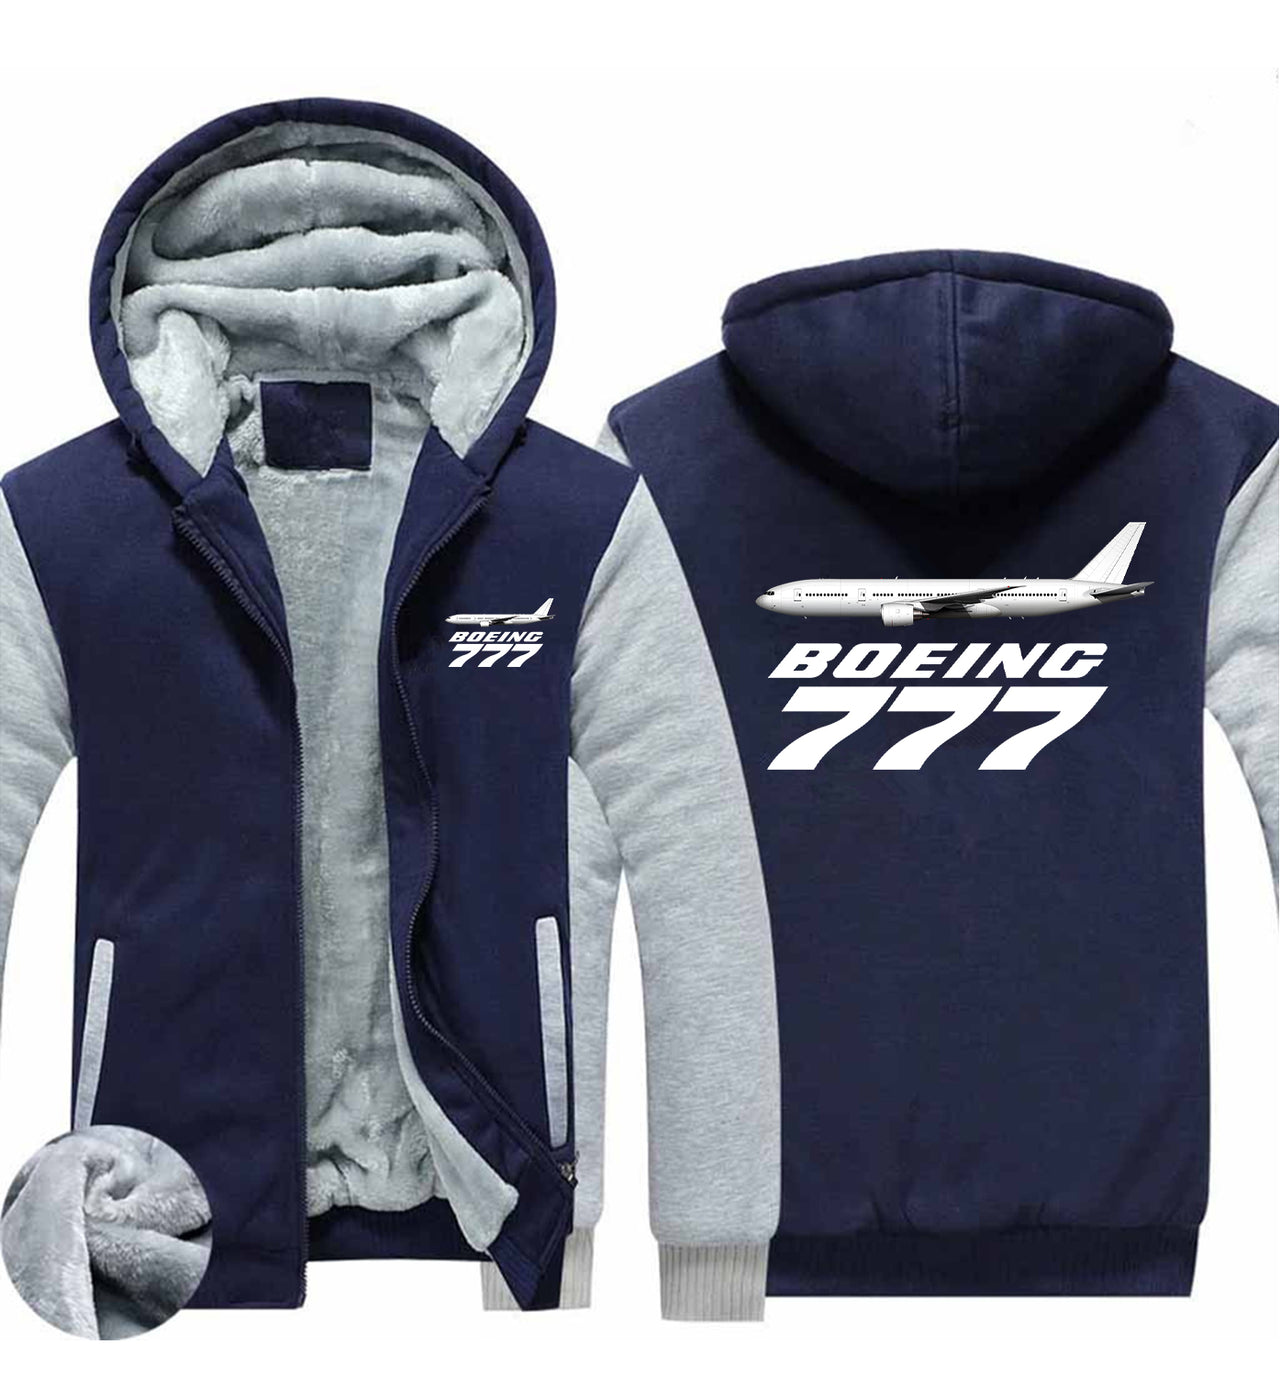 The Boeing 777 Designed Zipped Sweatshirts